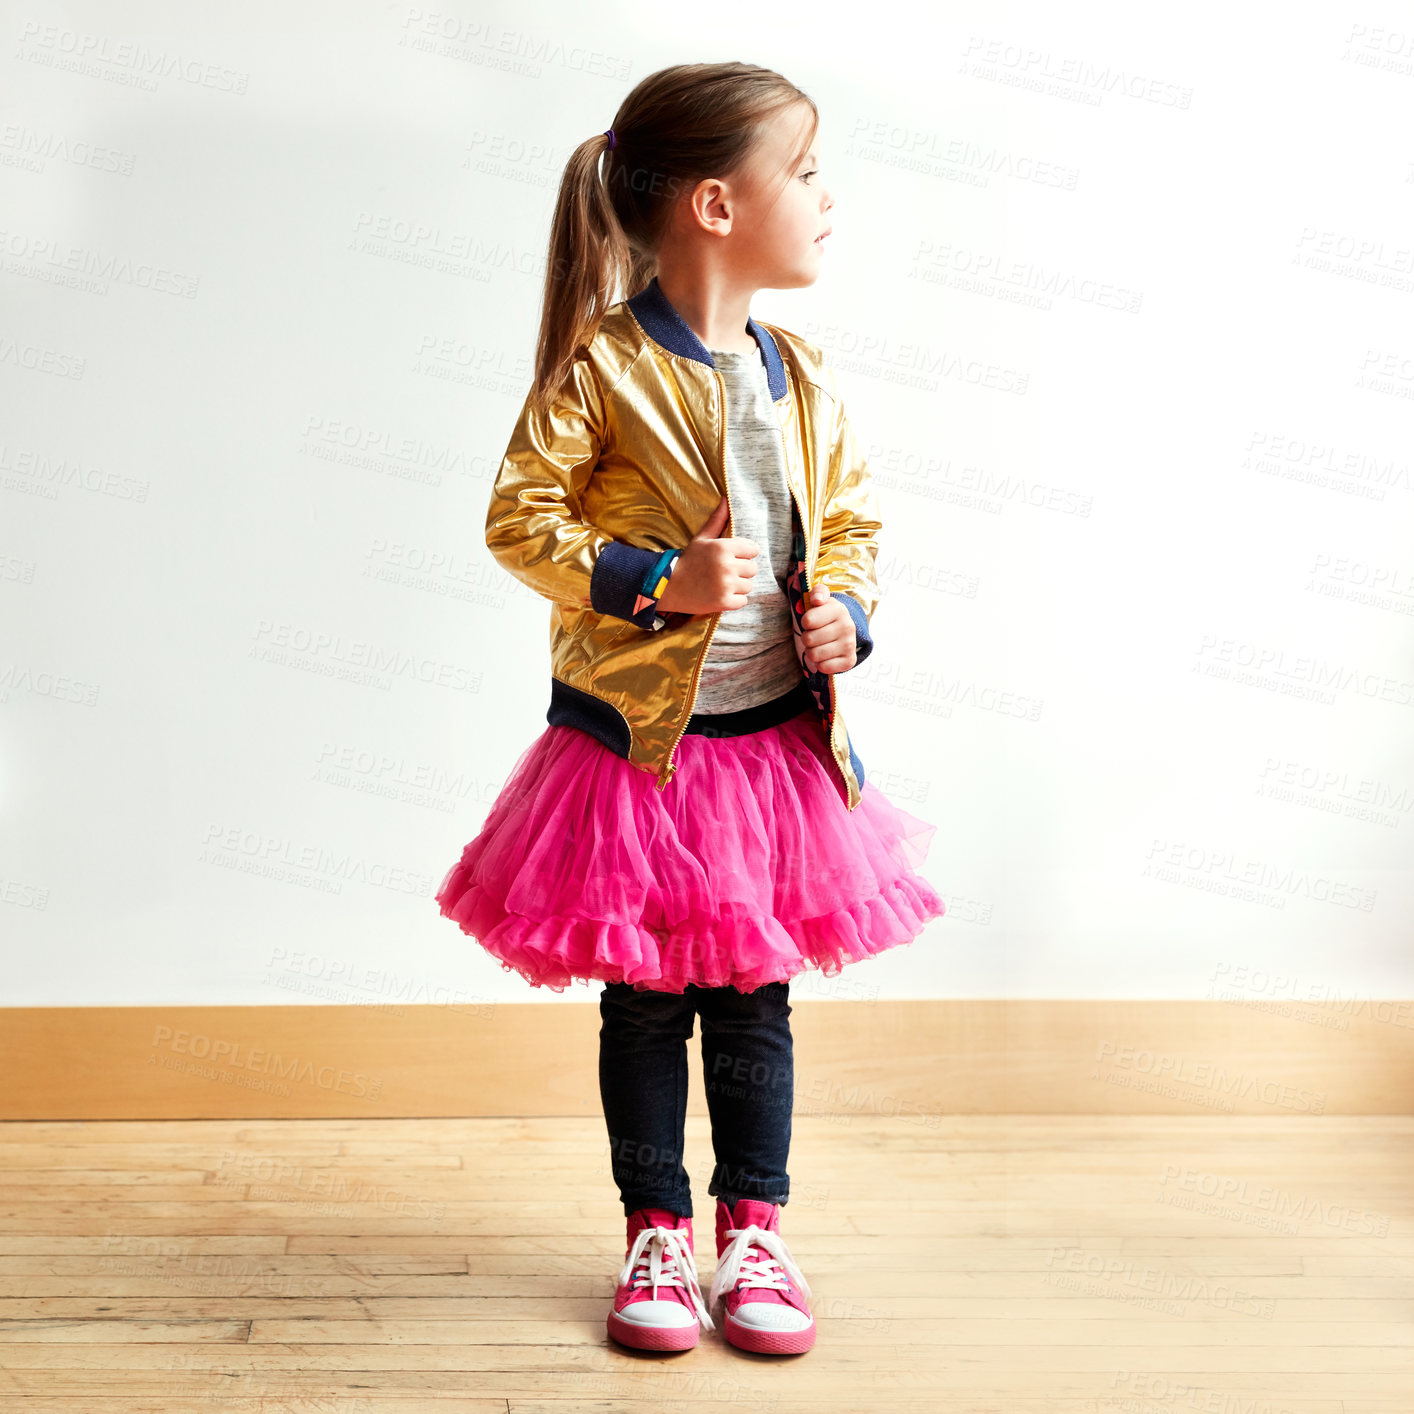 Buy stock photo Shot of a little girl in a dancing studio